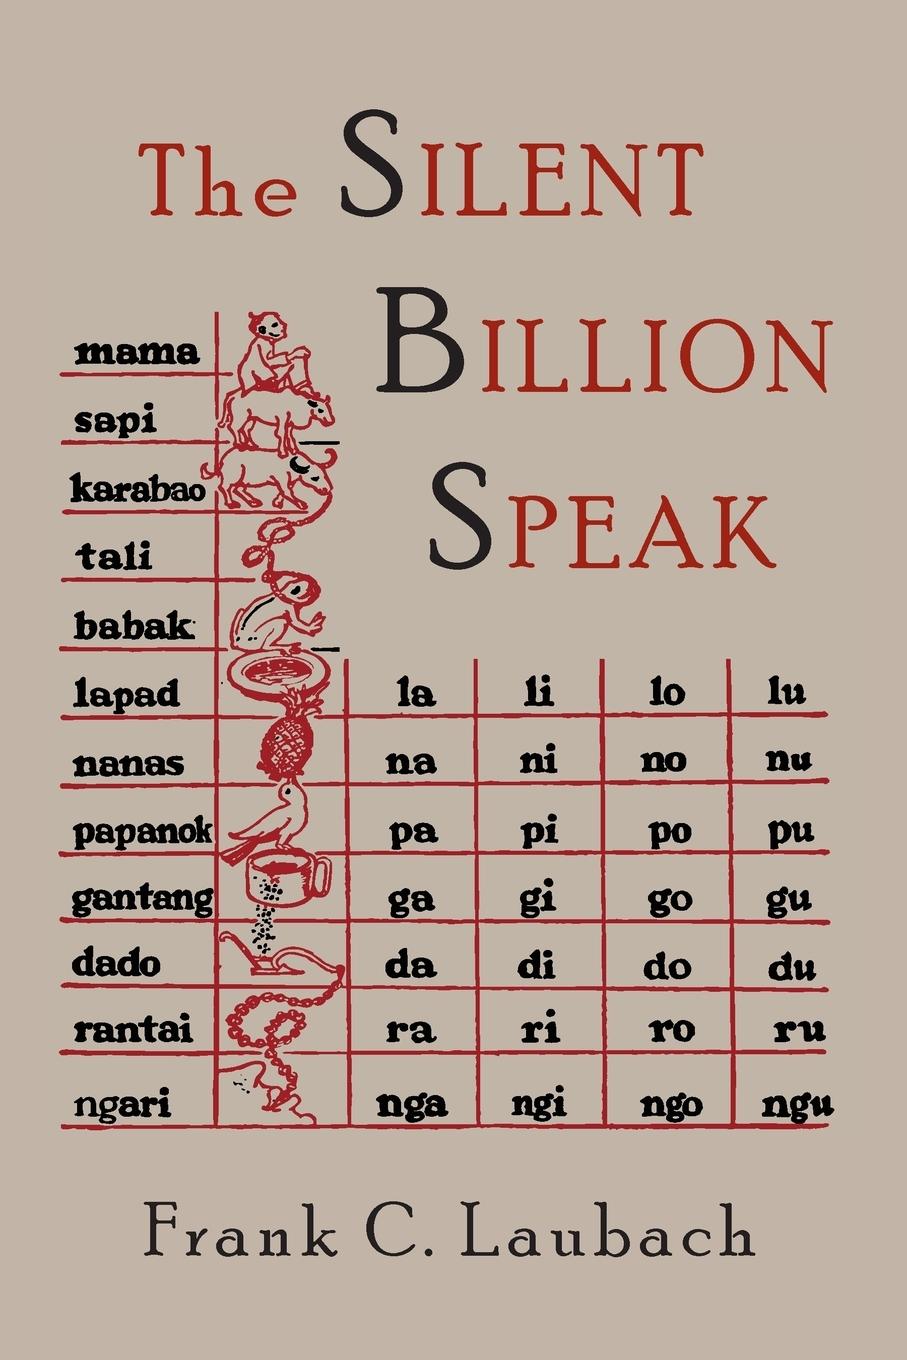 The Silent Billion Speak - Laubach, Frank Charles